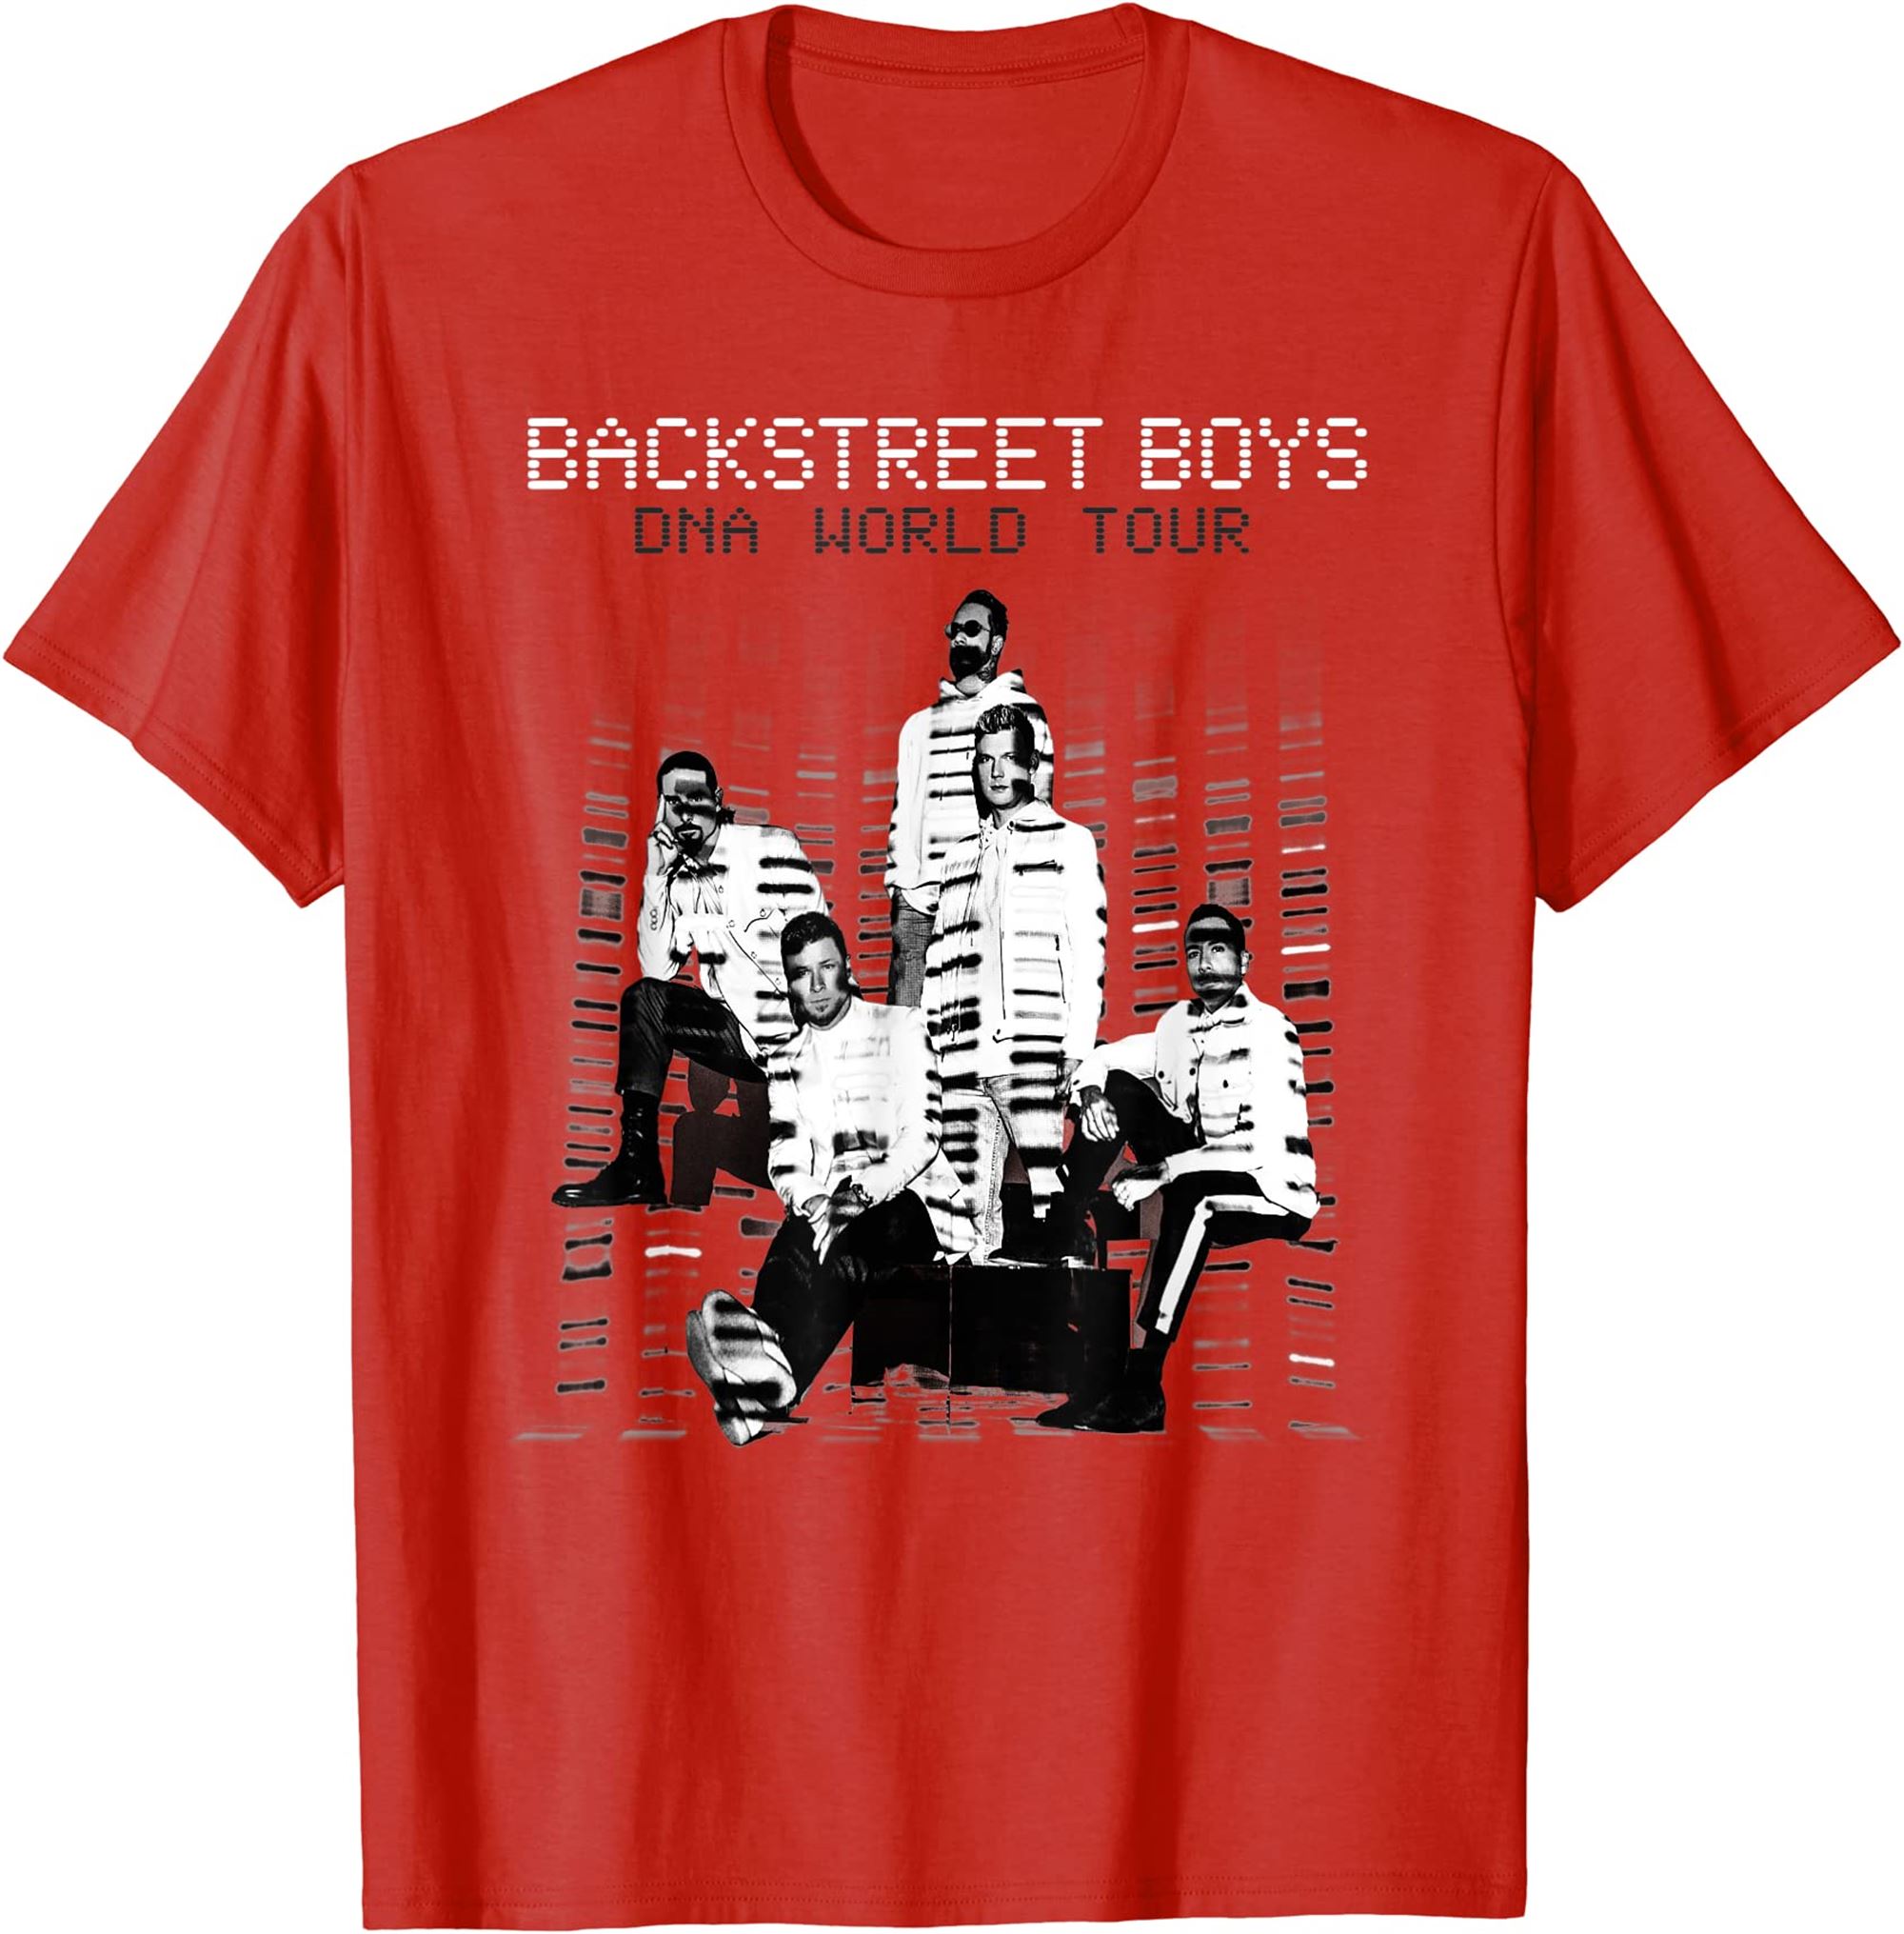 Backstreet Boys Dna Tour 2022 Milwaukee T-shirt Size Up To 5xl